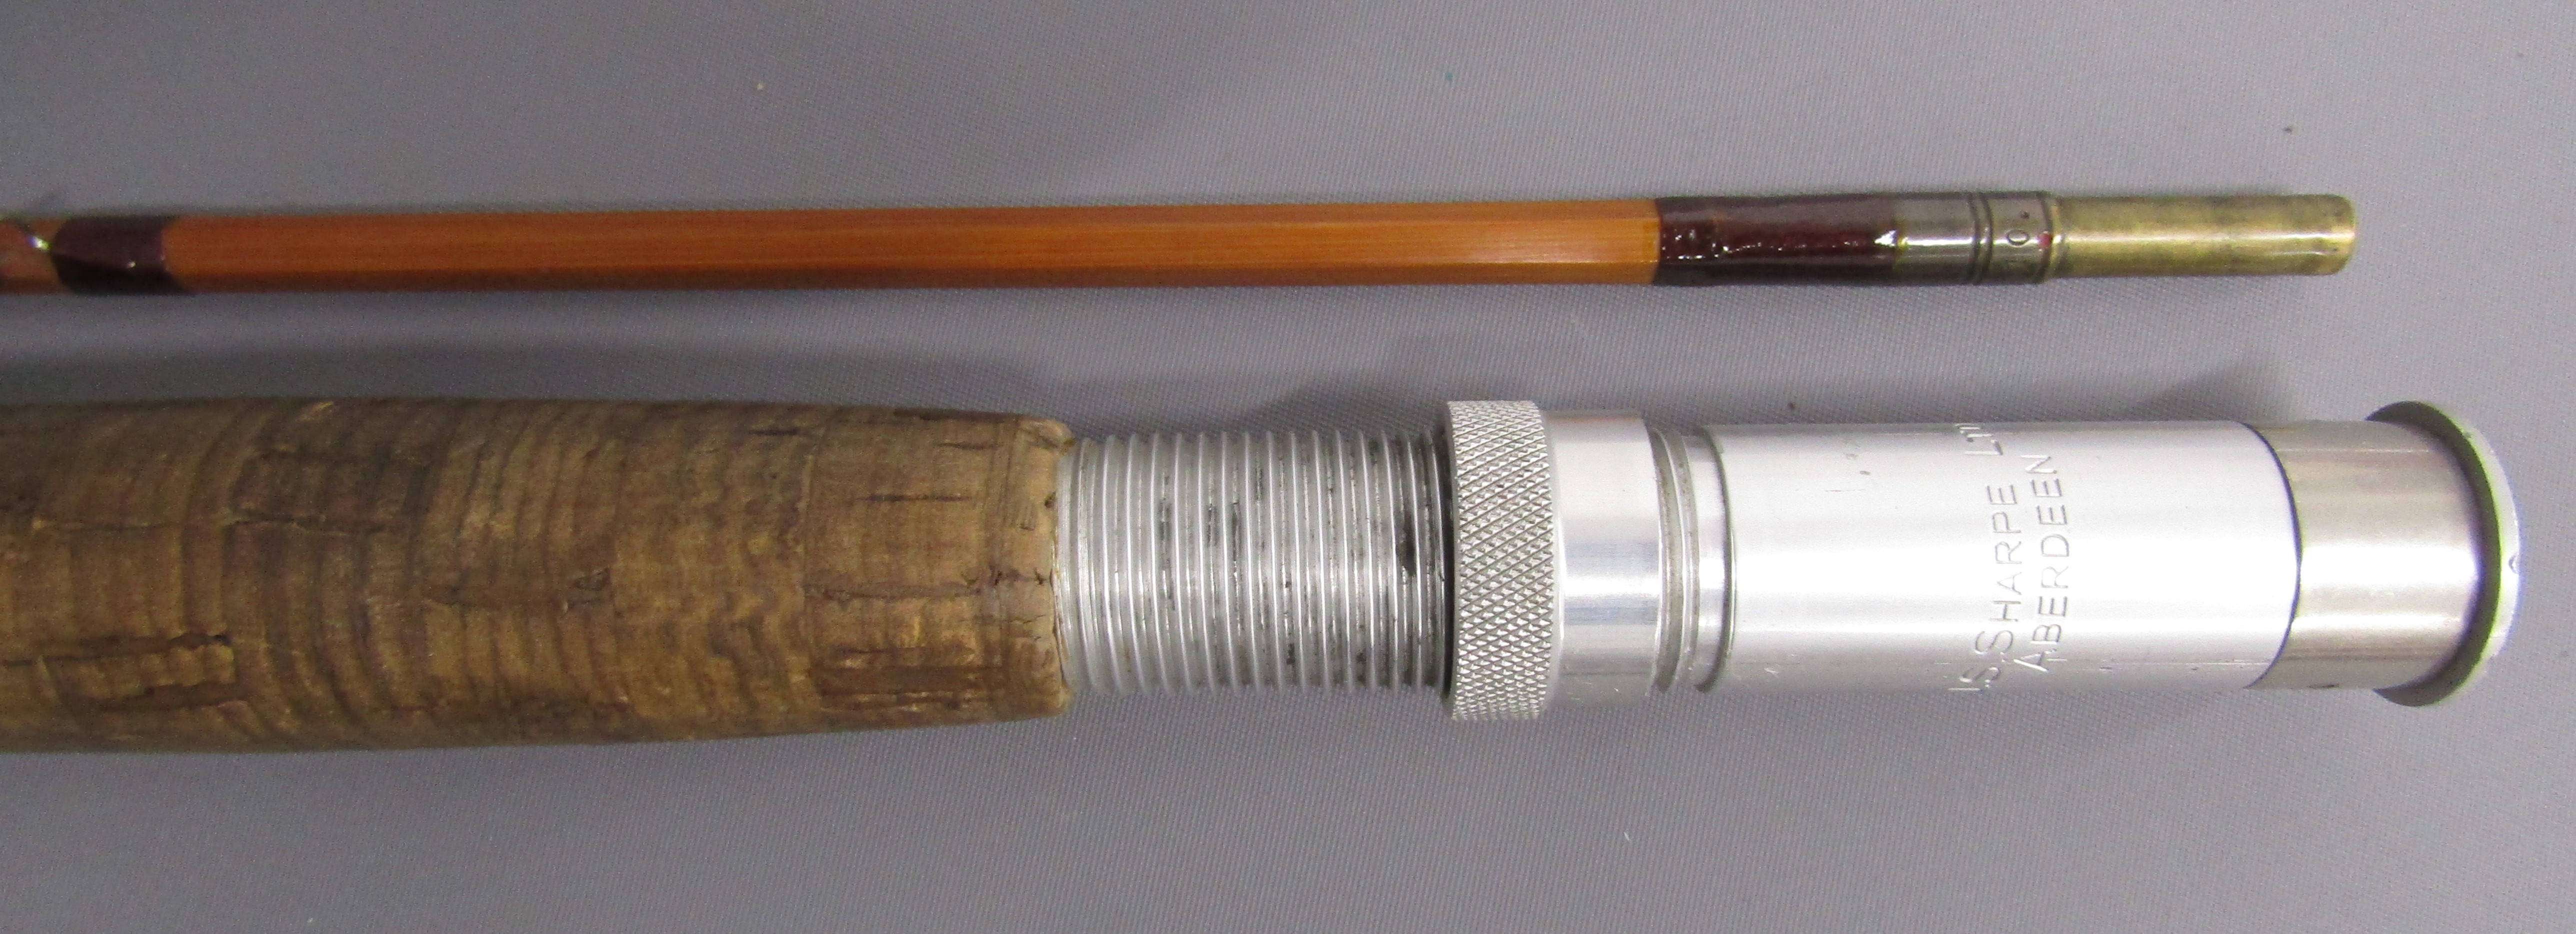 2 x J S Sharpe Ltd Aberdeen 'Scottie' split cane fishing rods - 2 piece 10ft screw joint includes - Image 7 of 9